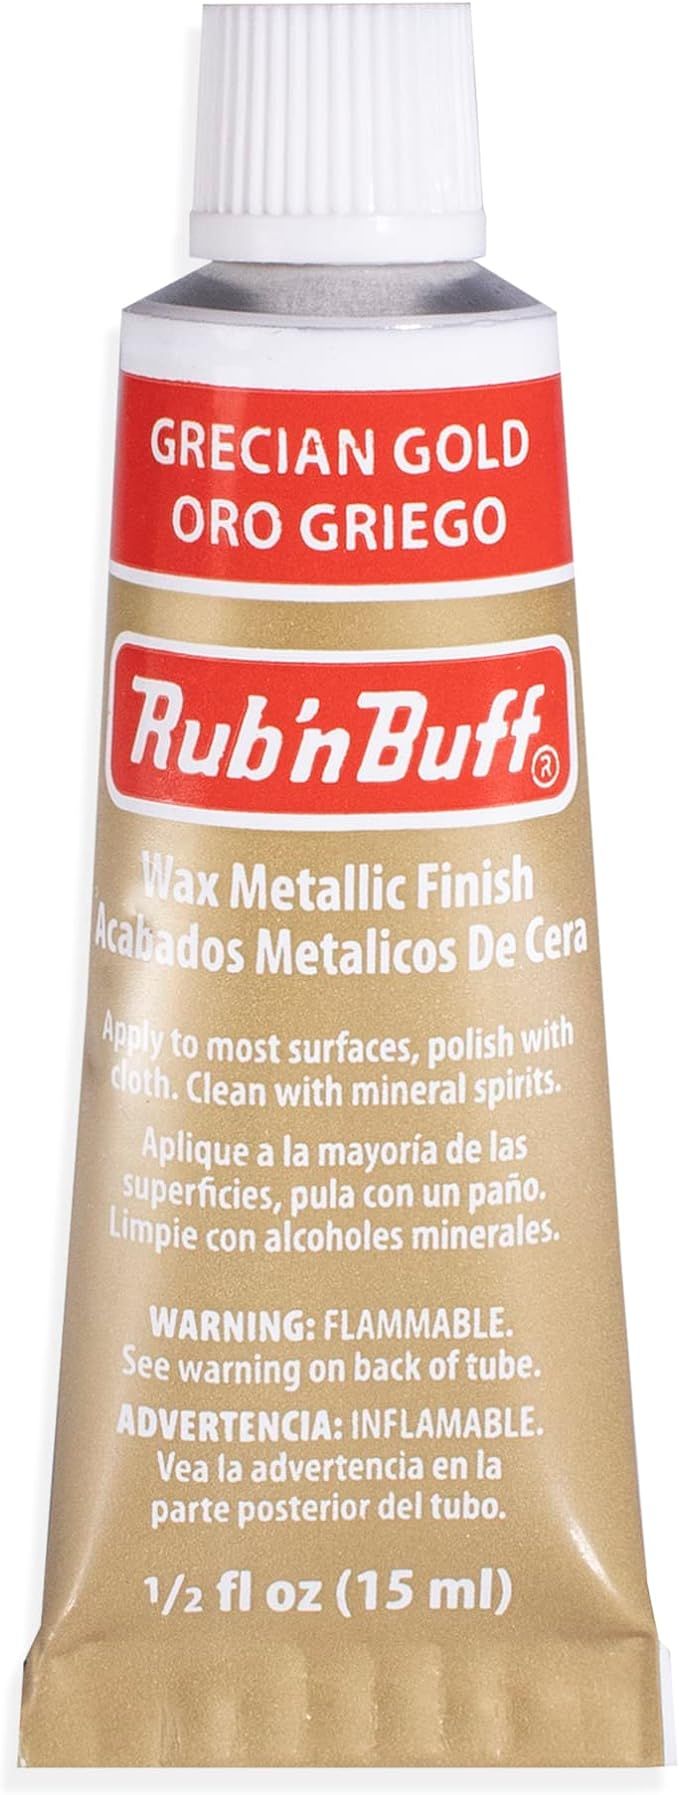 AMACO Rub n Buff Wax Metallic Finish - Rub n Buff Grecian Gold 15ml Tube - Versatile Gilding Wax ... | Amazon (US)